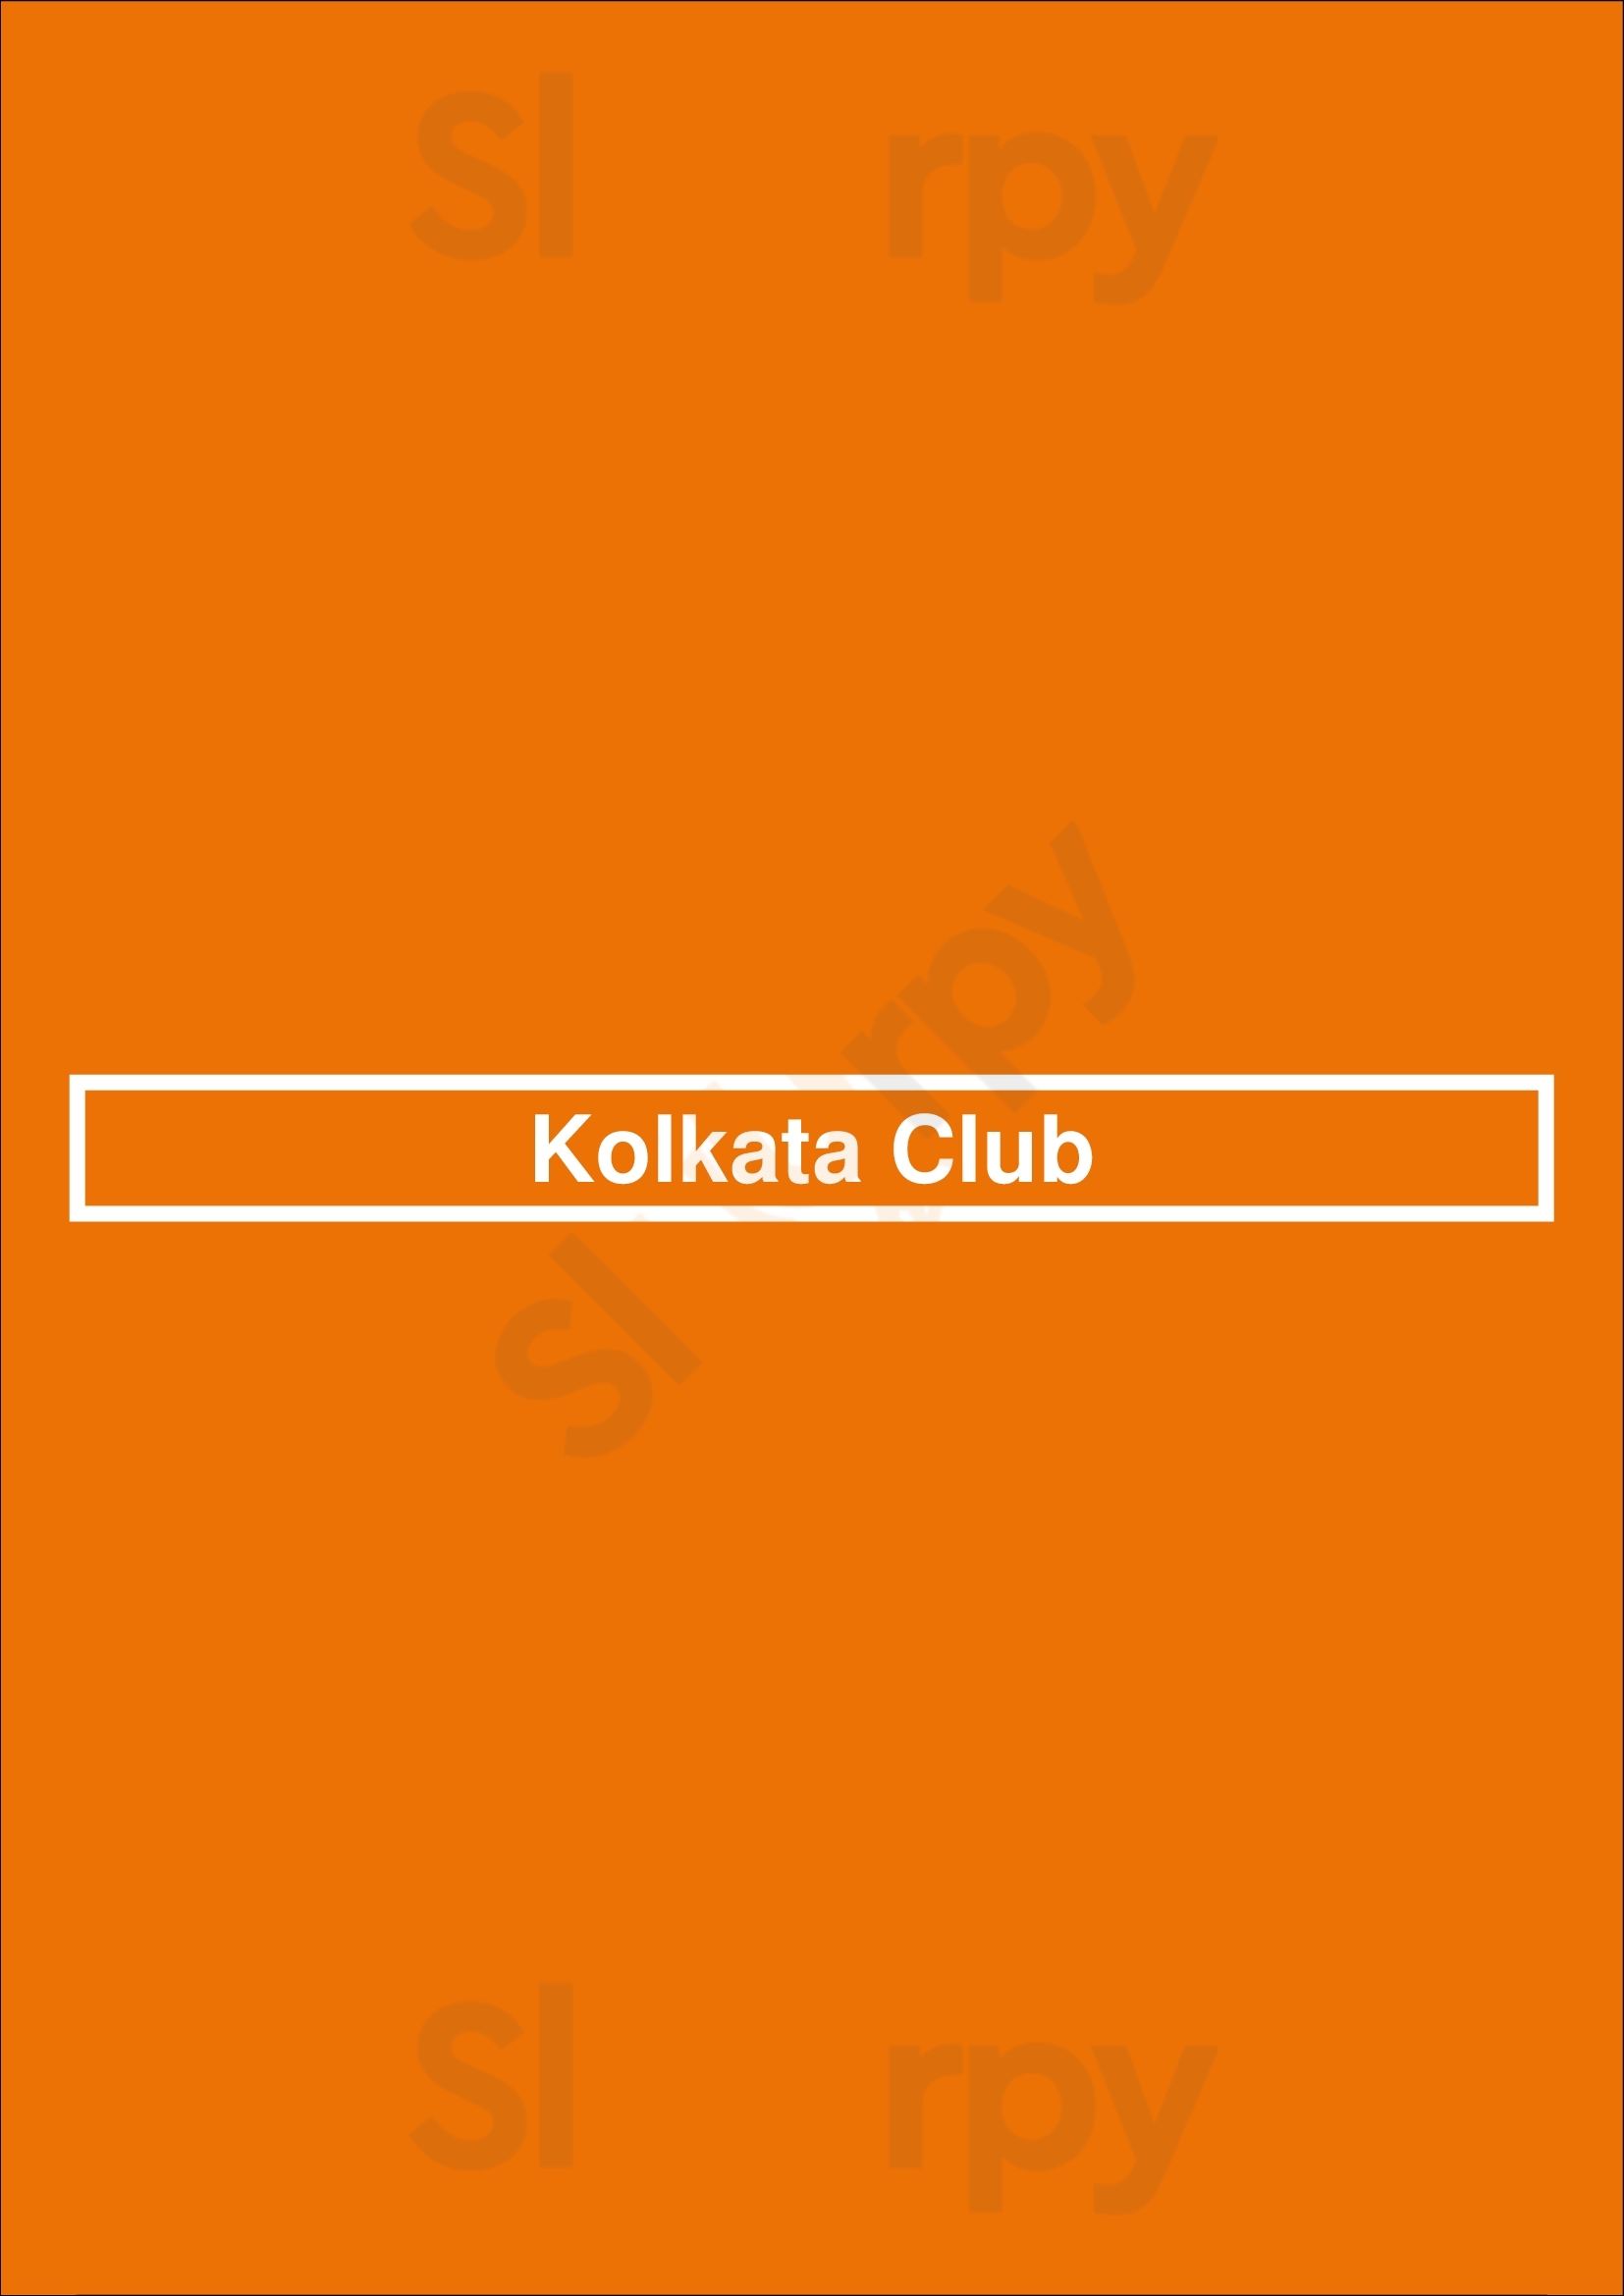 Kolkata Club Mississauga Menu - 1